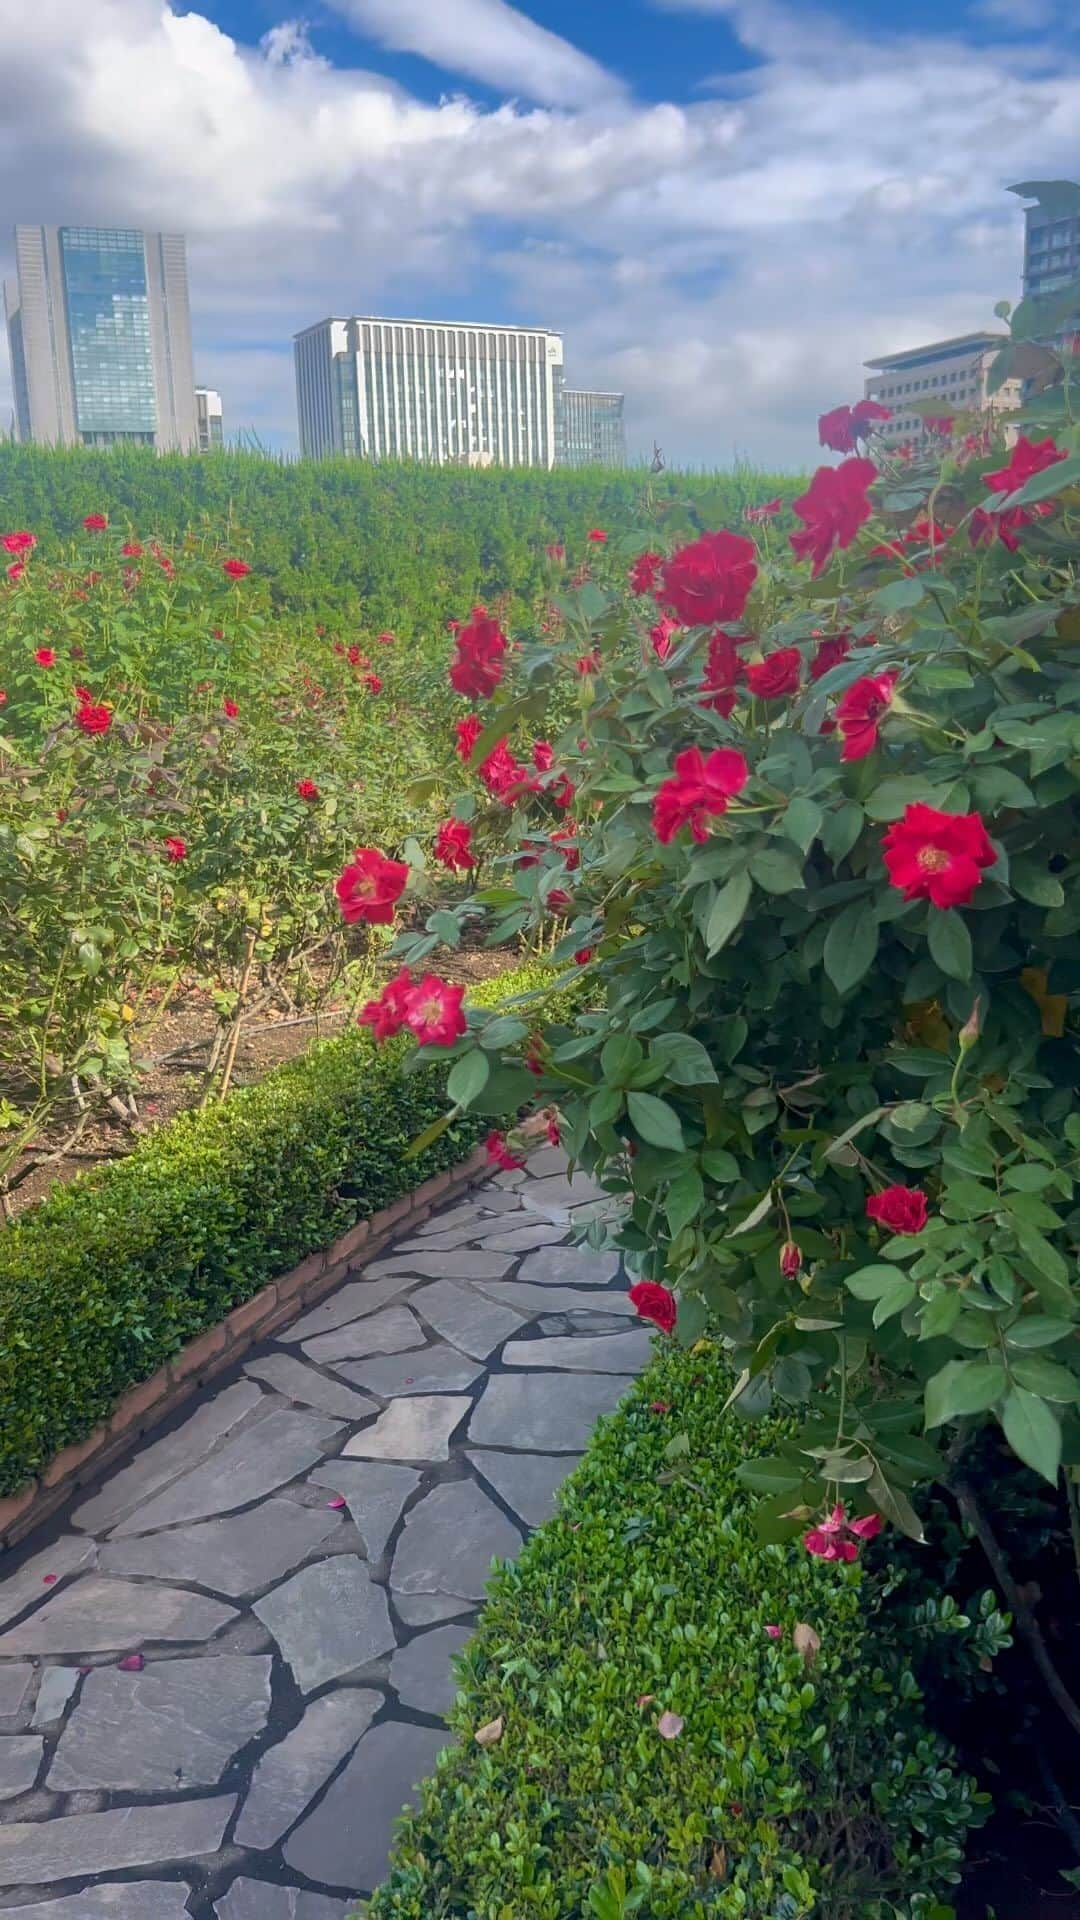 ホテル ニューオータニのインスタグラム：「【レッドローズガーデンスペシャルマンス🌹】 Red Rose Garden Special Month🌹  If you love this photo as we do, please comment with a🌹 stamp! ＊素敵！と思ったら🌹のスタンプをコメントしてください。  2023年9月23日（土・祝）～10月22日（日） September 23- October 22 2023  30種3万輪のバラが咲き誇る屋上庭園Red Rose Gardenを一部の方に向けて特別に開放！期間限定で入場券付きレストランプランを販売しております。  今が見ごろの最盛期！  都心の"秘密の花園"で、優雅なひとときをお過ごしください。  The Red Rose Garden, is a rooftop garden with 30,000 roses of 30 different varieties in bloom, now opens to the public! For a limited-time special events will also be held.  Please enjoy a moment of elegance in our "secret garden" in the heart of the city.  ◇ご予約・詳細は@hotelnewotanitokyo プロフィールのURLより「Red Rose Garden」バナーをタップ👆  For reservations and details, tap the "Red Rose Garden" banner from the URL in @hotelnewotanitokyo's profile.  《レッドローズガーデンスペシャルマンス🌹》  期間：2023年9月23日（土・祝）～10月22日（日） 時間：10:00～17:00（最終入場16:30）  入園対象者： ♦ニューオータニクラブ会員の皆さま（ご同伴のお客さまは2名さままで） ♦ホテルニューオータニ（東京）にご宿泊中のすべてのお客さま ♦レッドローズガーデンイベントにご参加のお客さま ♦レッドローズガーデン入場券付レストランプランをご利用のお客さま ♦ご記入済みのニューオータニクラブ入会申込書をご持参の方（1グループ3名さままで） ♦ニューオータニクラブVISAカードのオンライン入会お申し込みをお済みの方（1グループ3名さままで） ※お申し込み番号やお申し込み受付のお知らせメールなど、ご証明のものをご提示いただきます。  #レッドローズガーデン #ローズガーデン #バラ園 #バラ #バラのある暮らし #ガーデニング  #rosegarden #roses #redrosegarden  #ホテル #東京ホテル #ホテルステイ  #ホテルニューオータニ #ニューオータニ #hotelnewotani #newotani #赤坂見附 #赤坂 #四ツ谷 #紀尾井町  #tokyo #japan #tokyotrip  #tokyotravel #tokyohotel  #virtualtour #forbestravelguide #futuretravelguide #thepreferredlife」